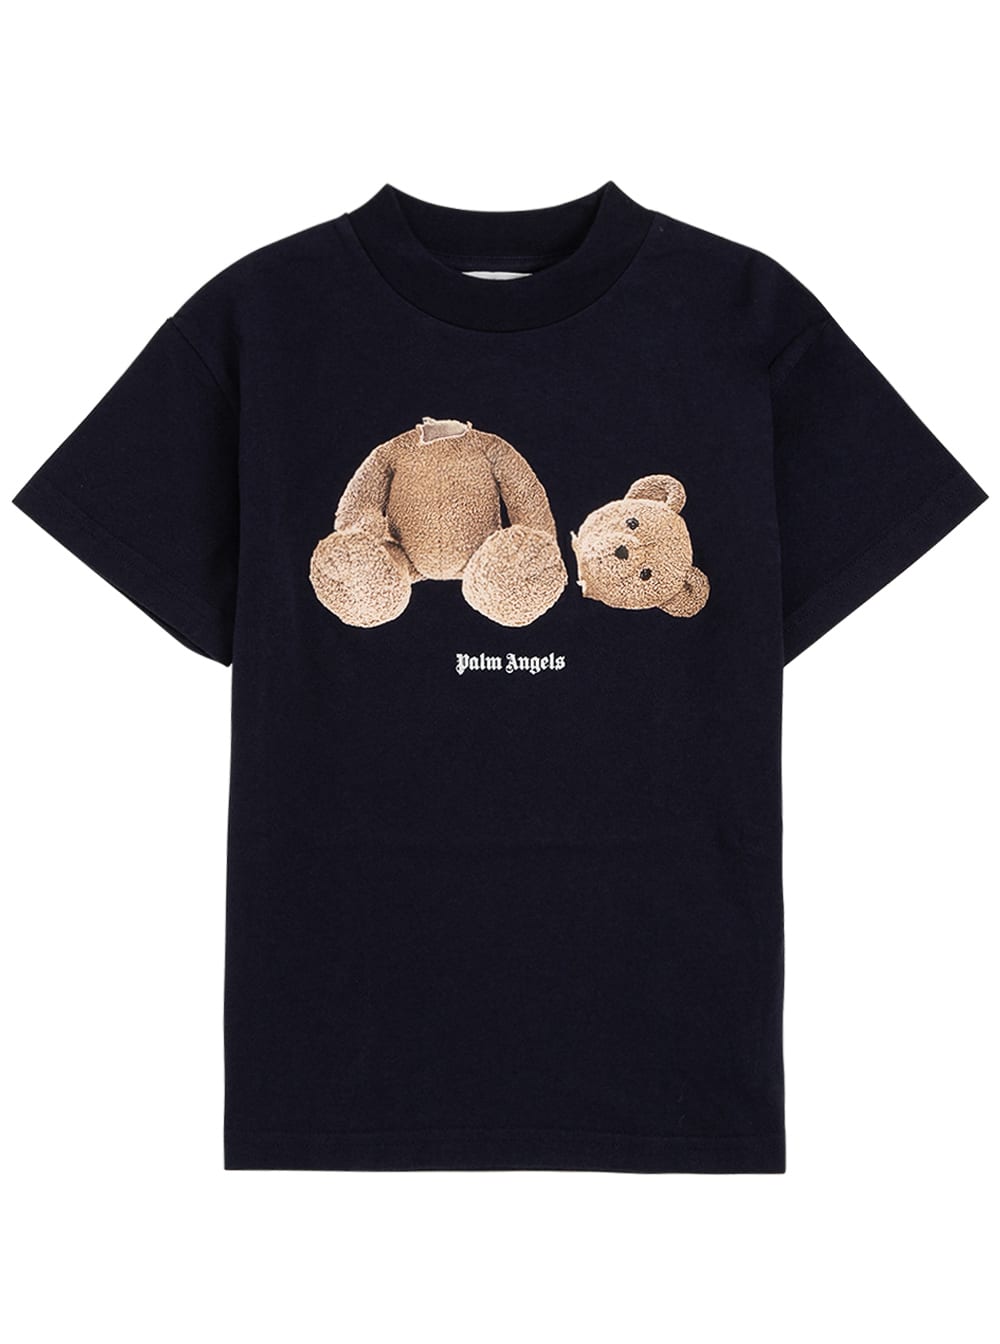 Palm Angels Black Cotton T-shirt With Teddy Bear Print